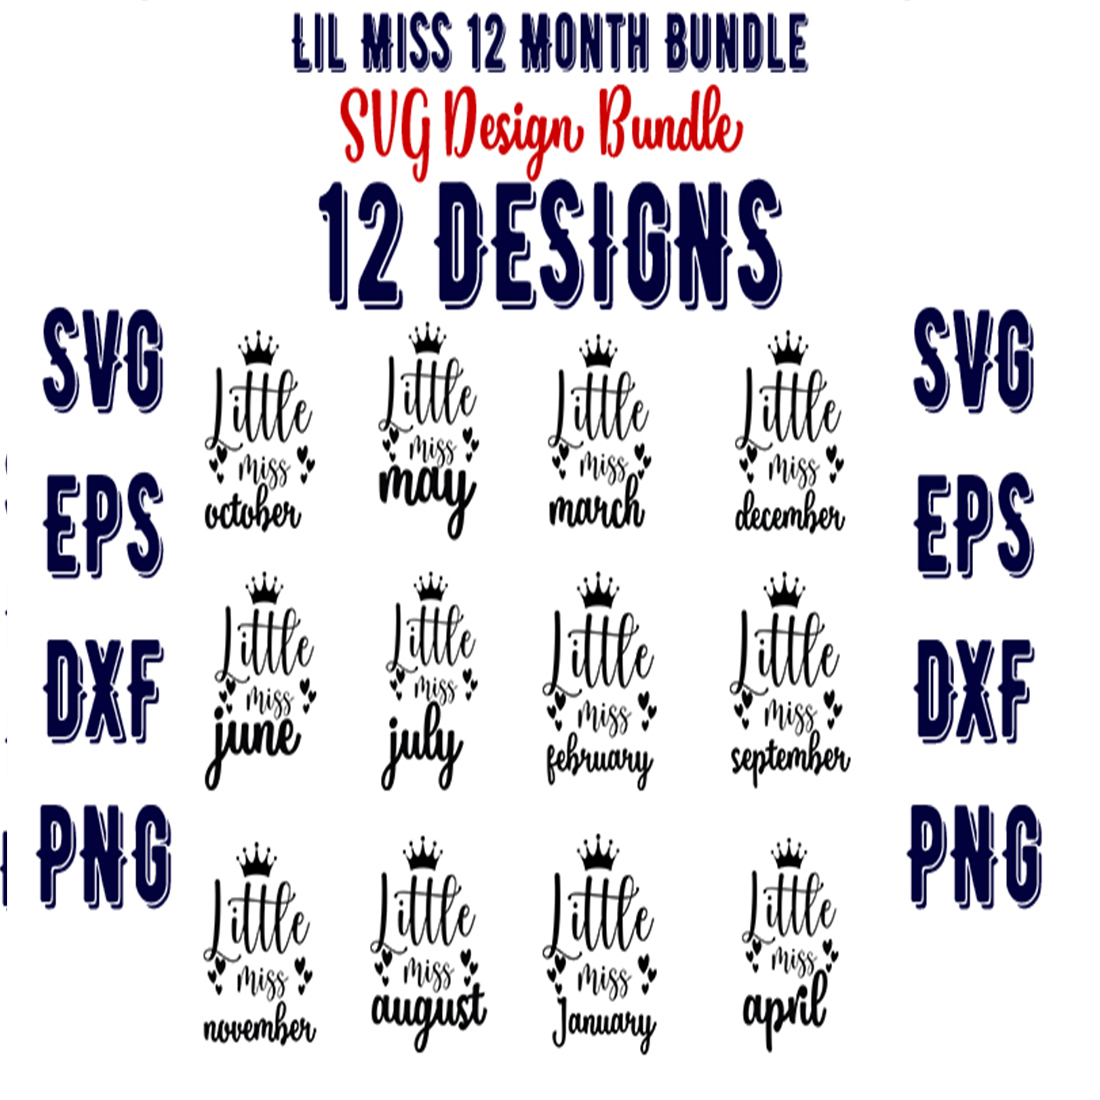 Lil Miss 12 Month Bundle cover image.